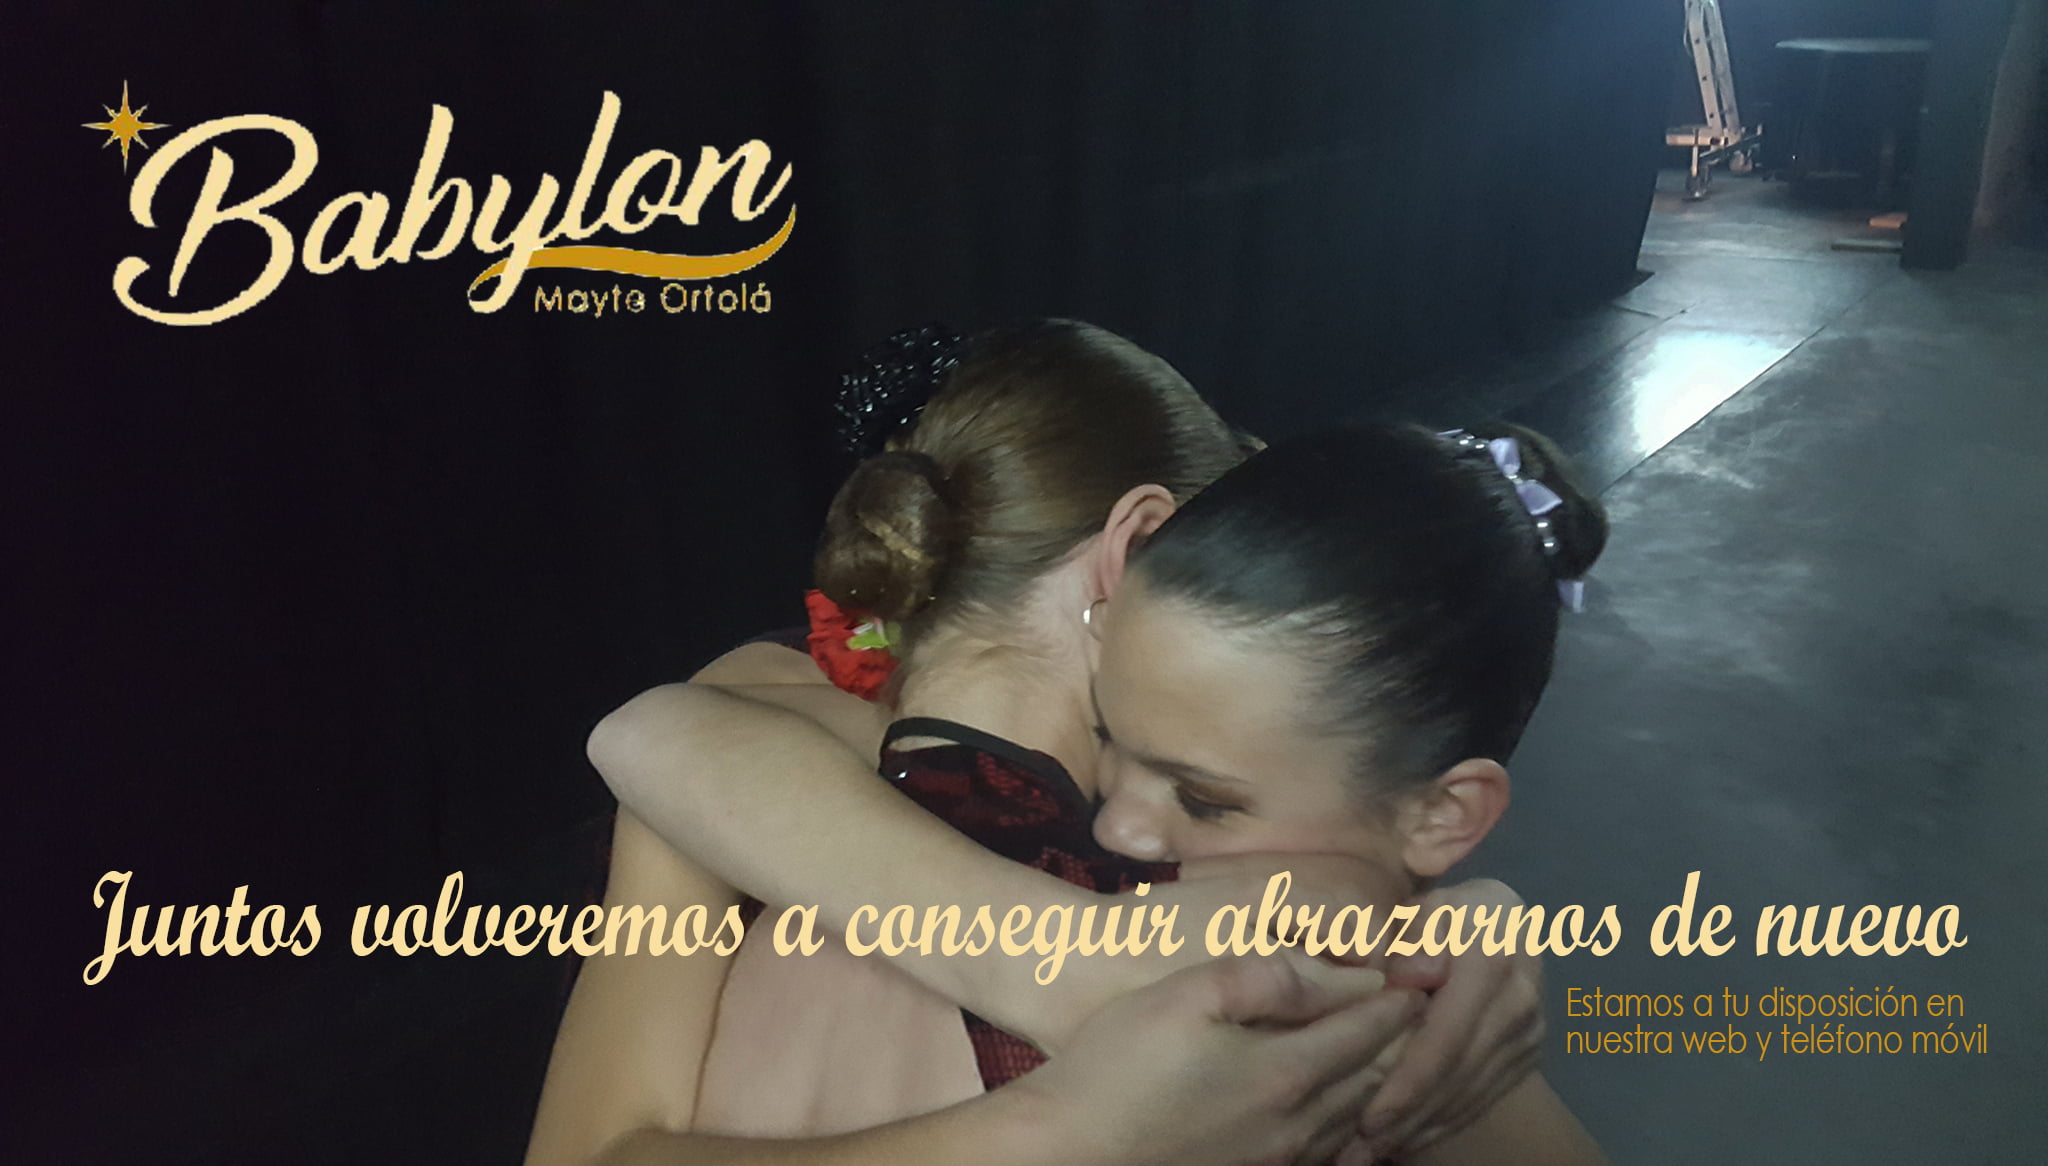 Babylon Escuela de Danza lanza un mensaje positivo